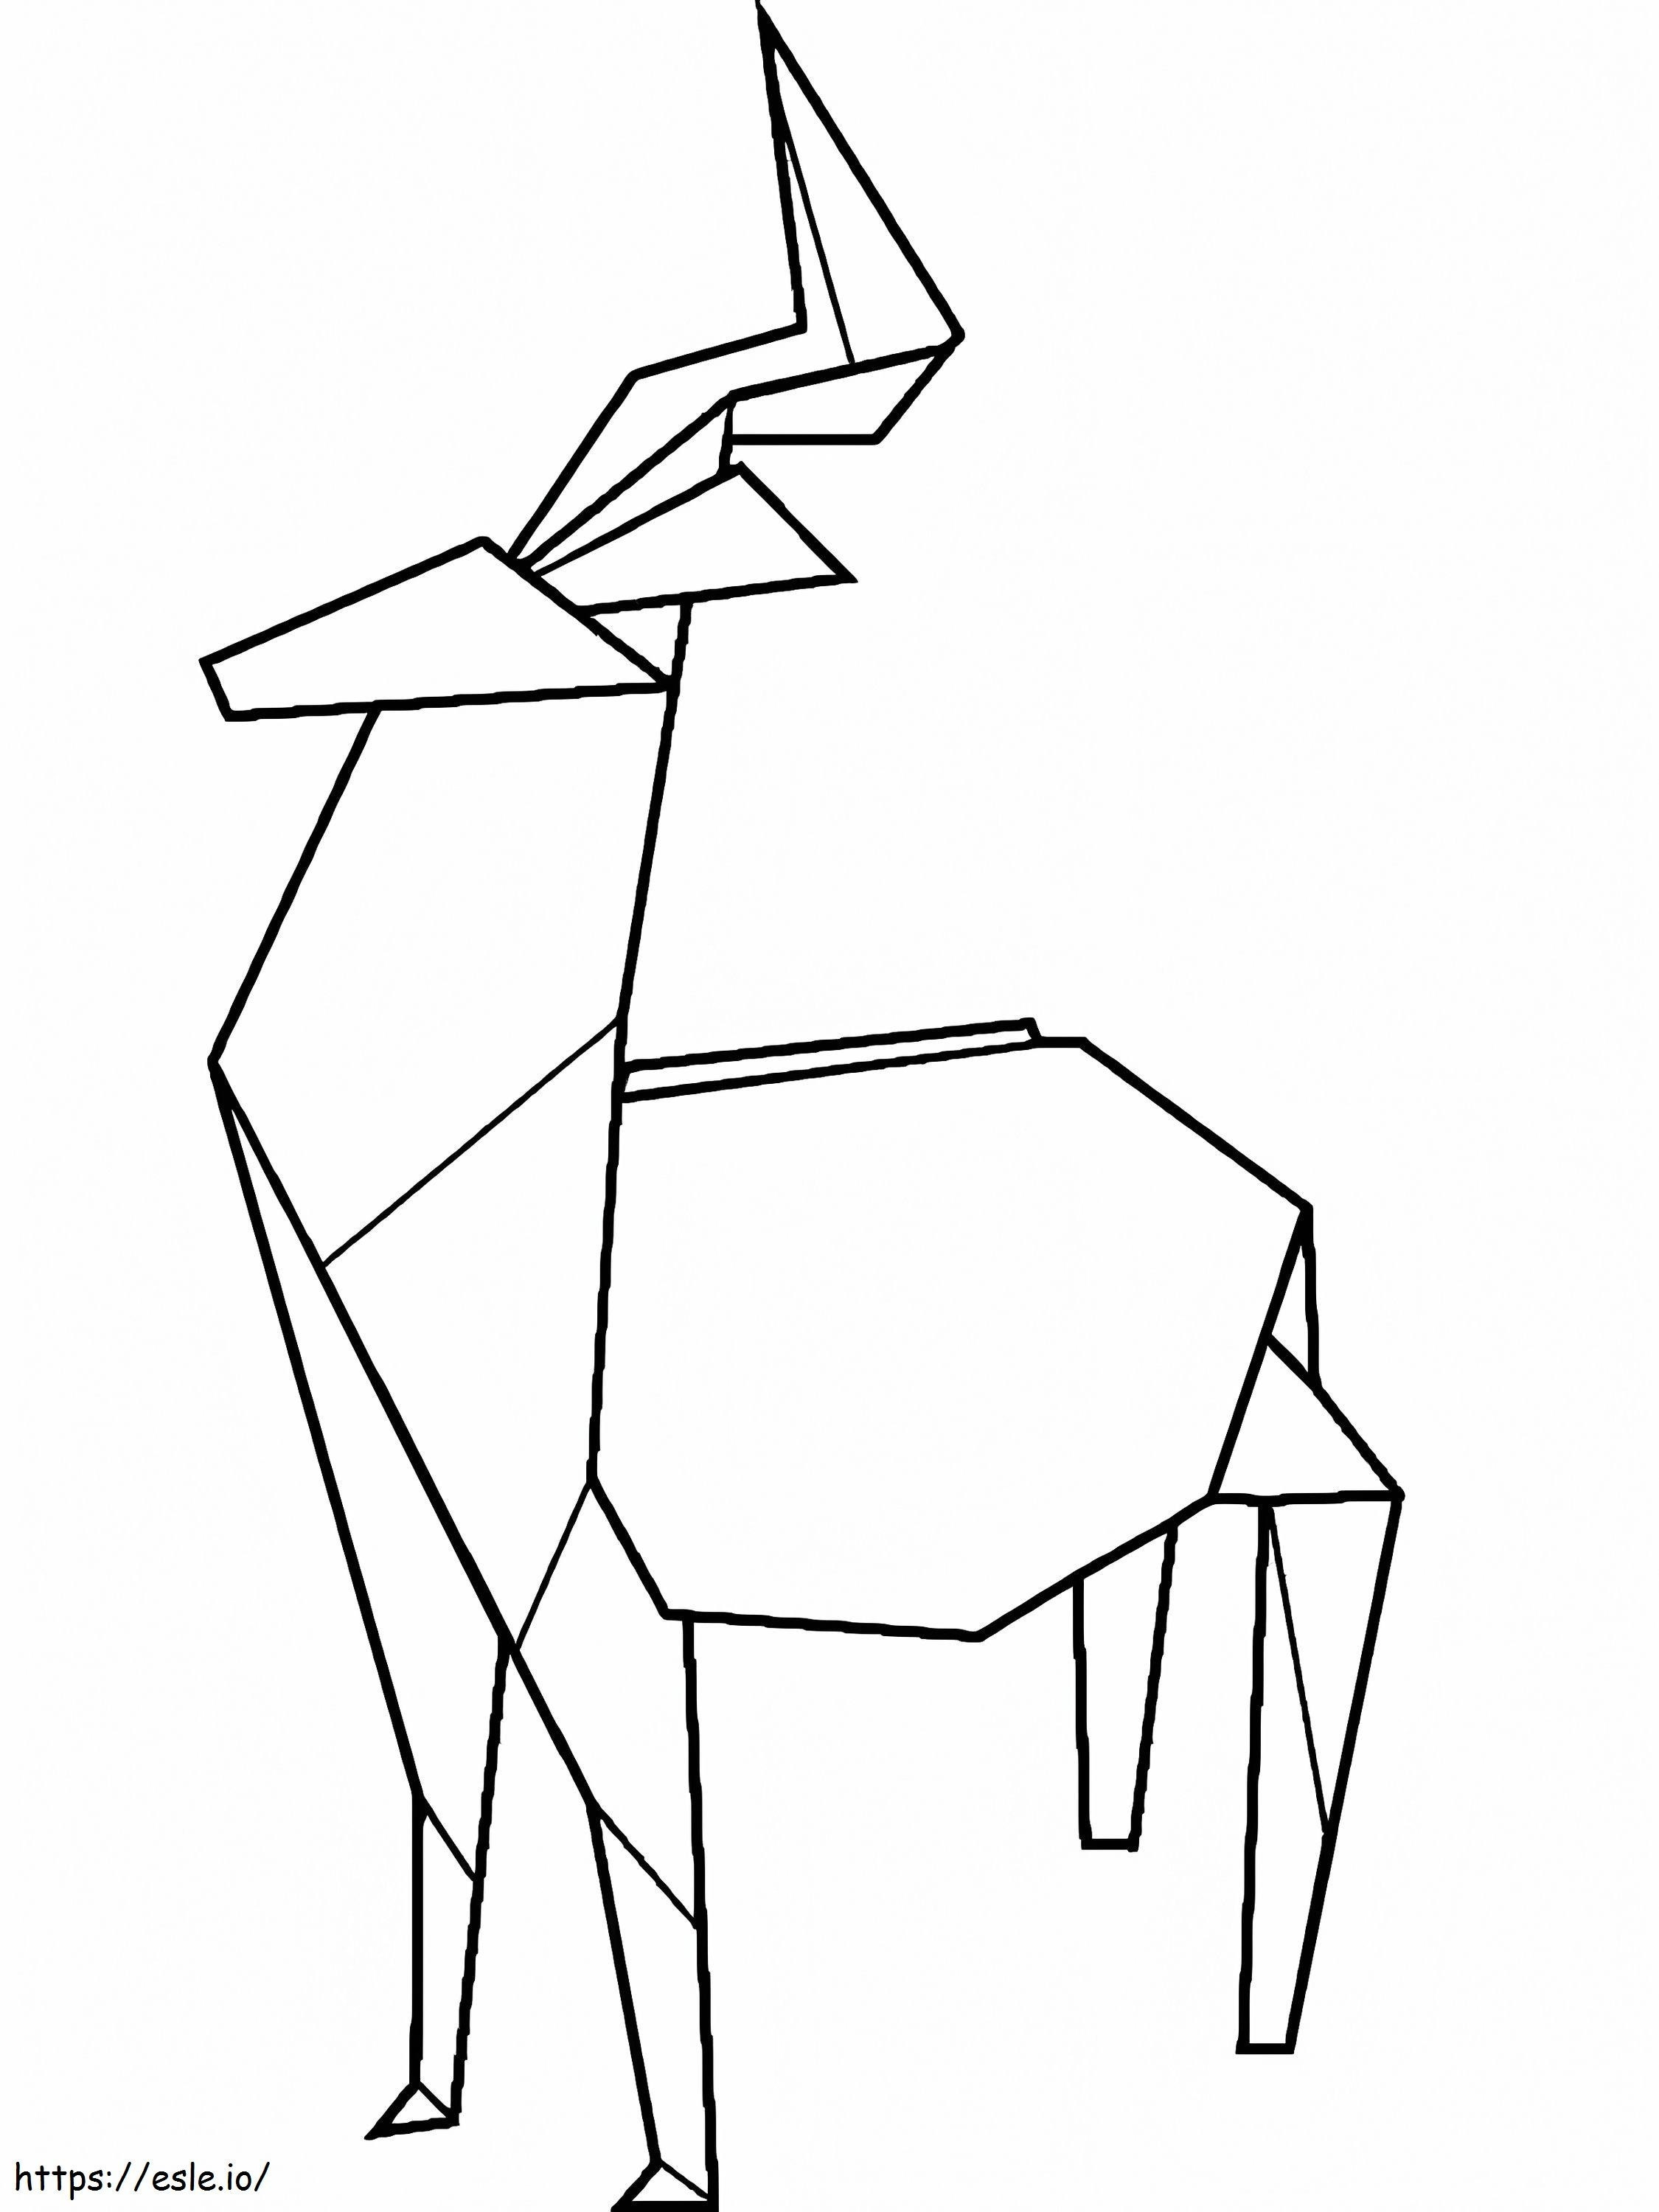 Coloriage Cerf Origami à imprimer dessin